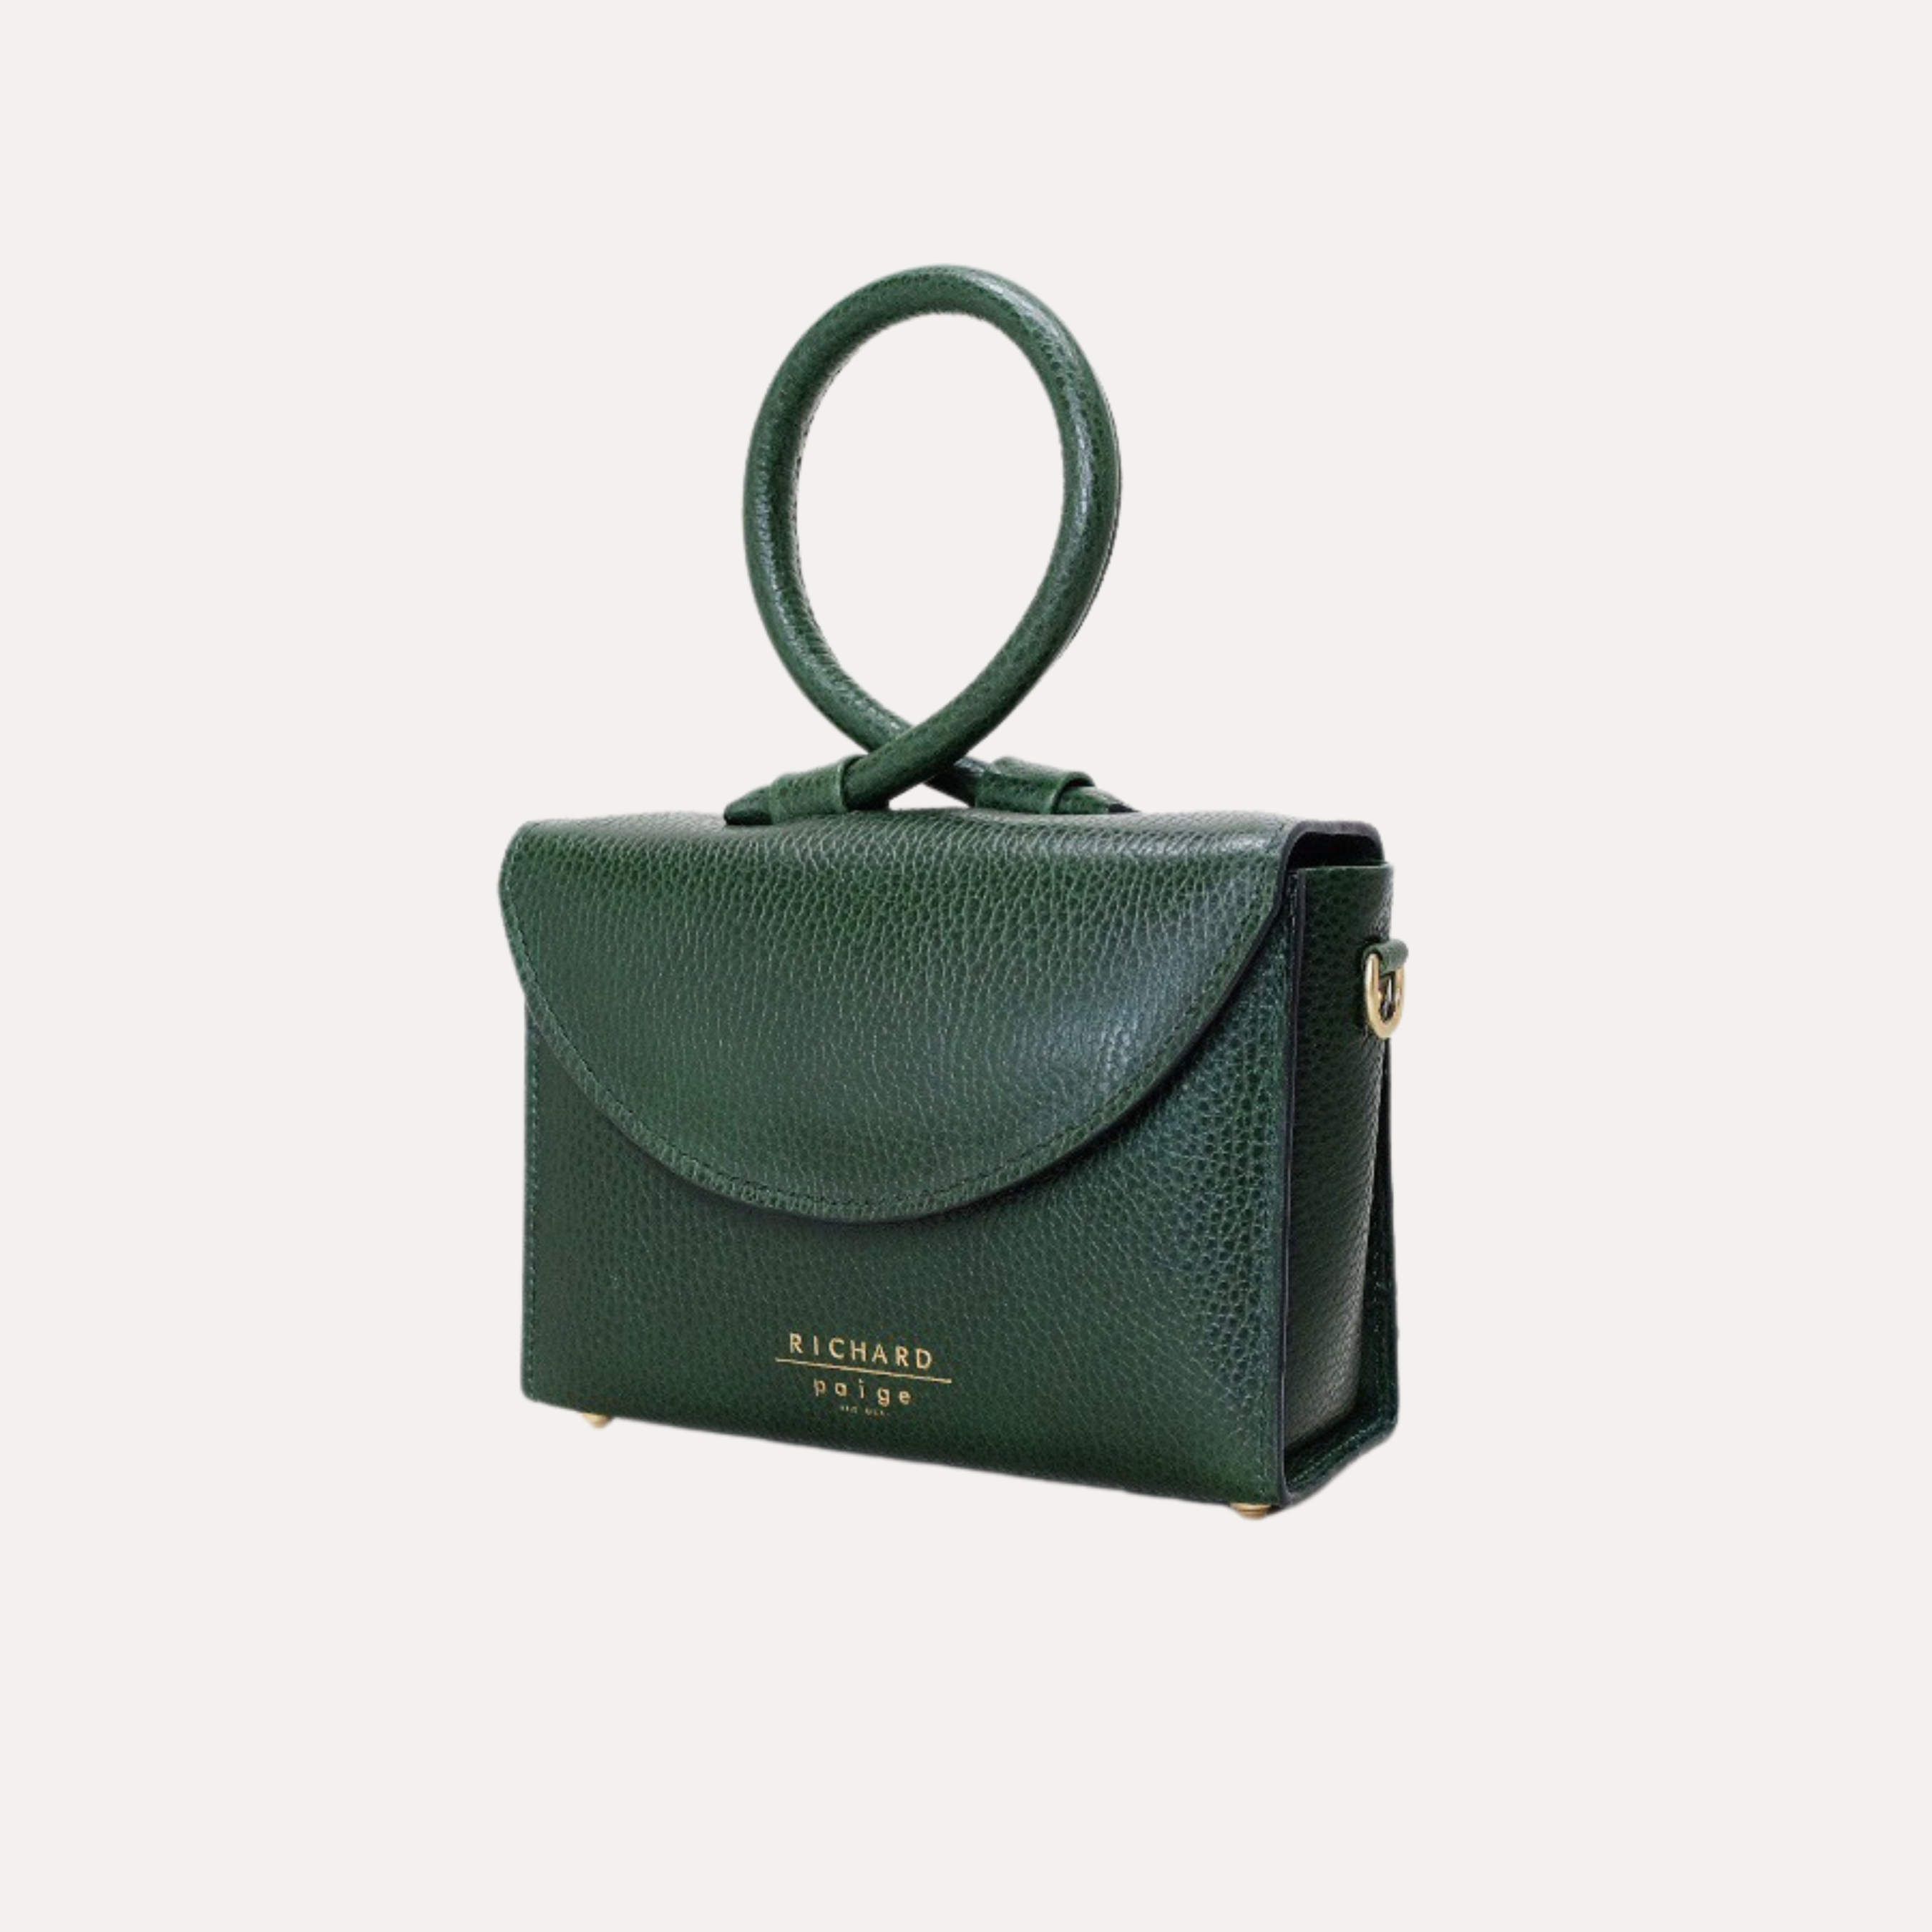 Pebbled Green Italian Leather Loop Handle Handbag Made in Australia